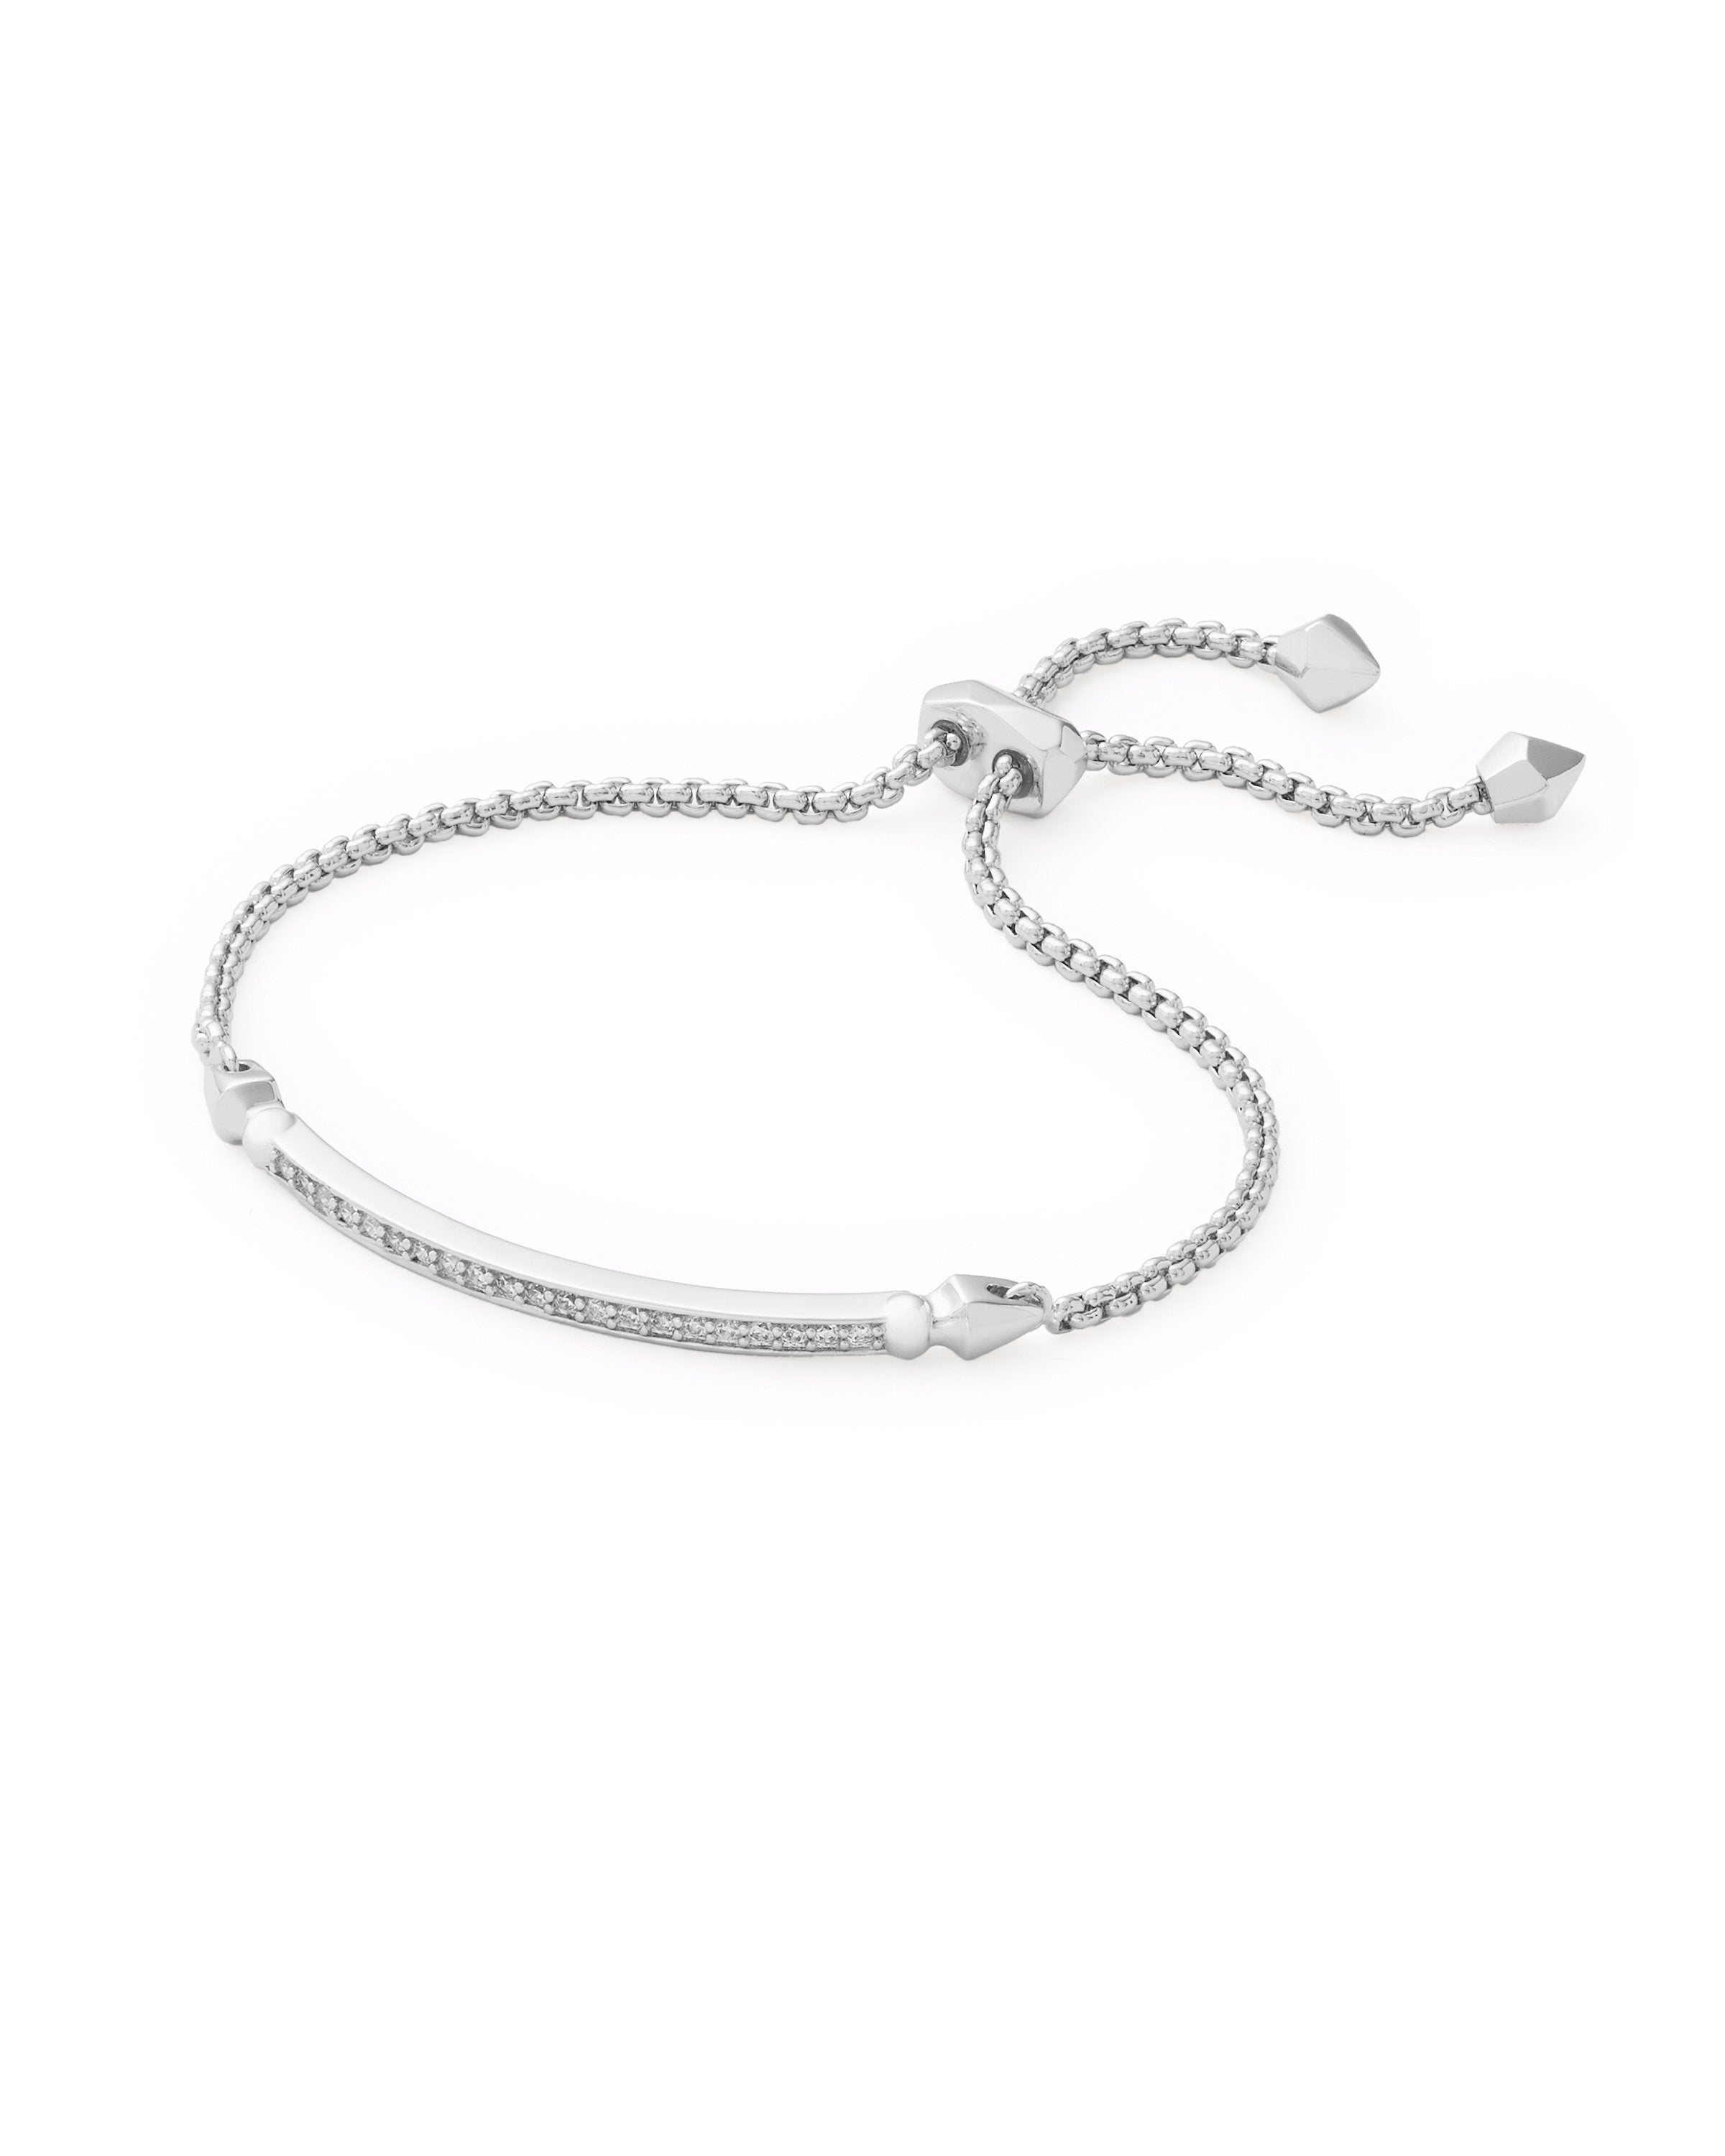 Ott Adjustable Chain Bracelet - Silver Front View